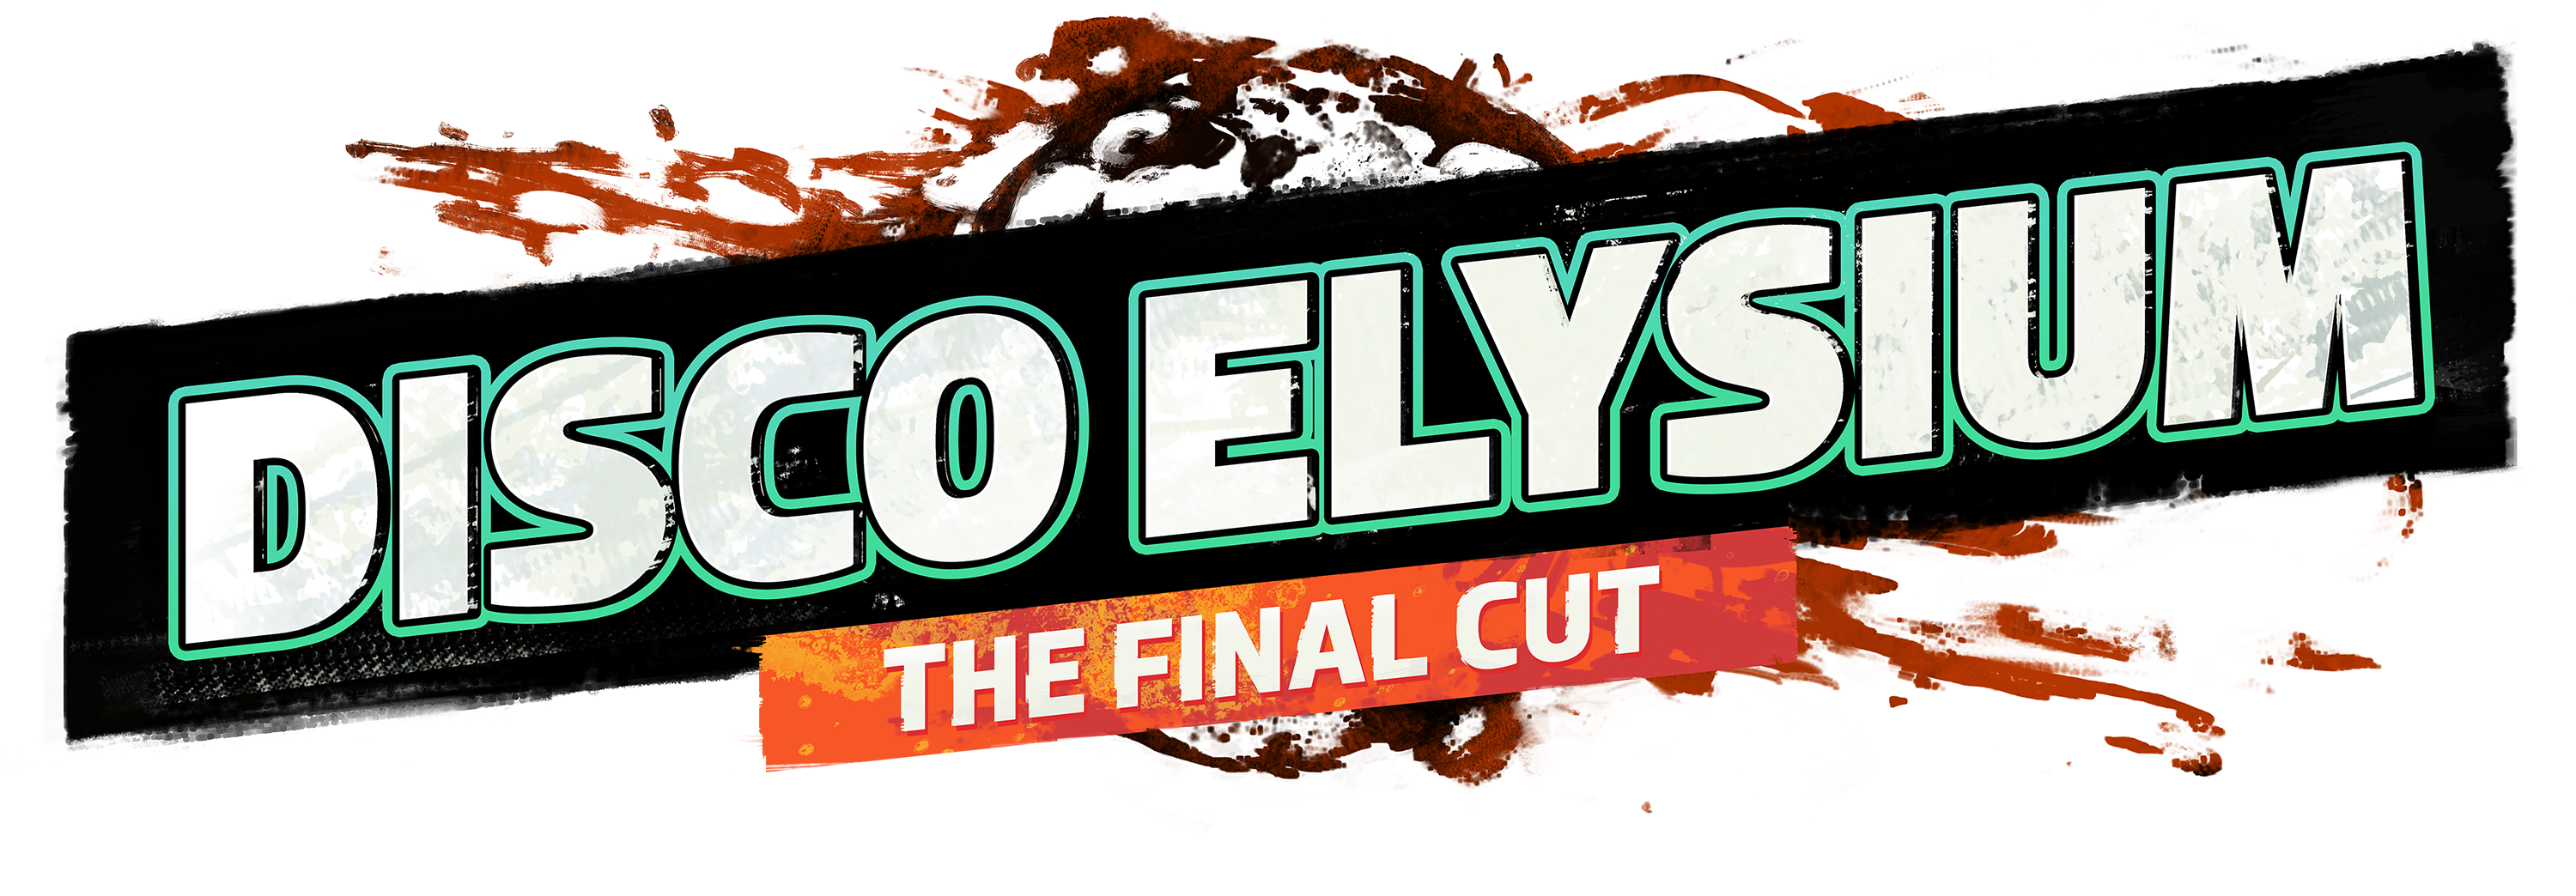 Disco Elysium – Final cut – logo